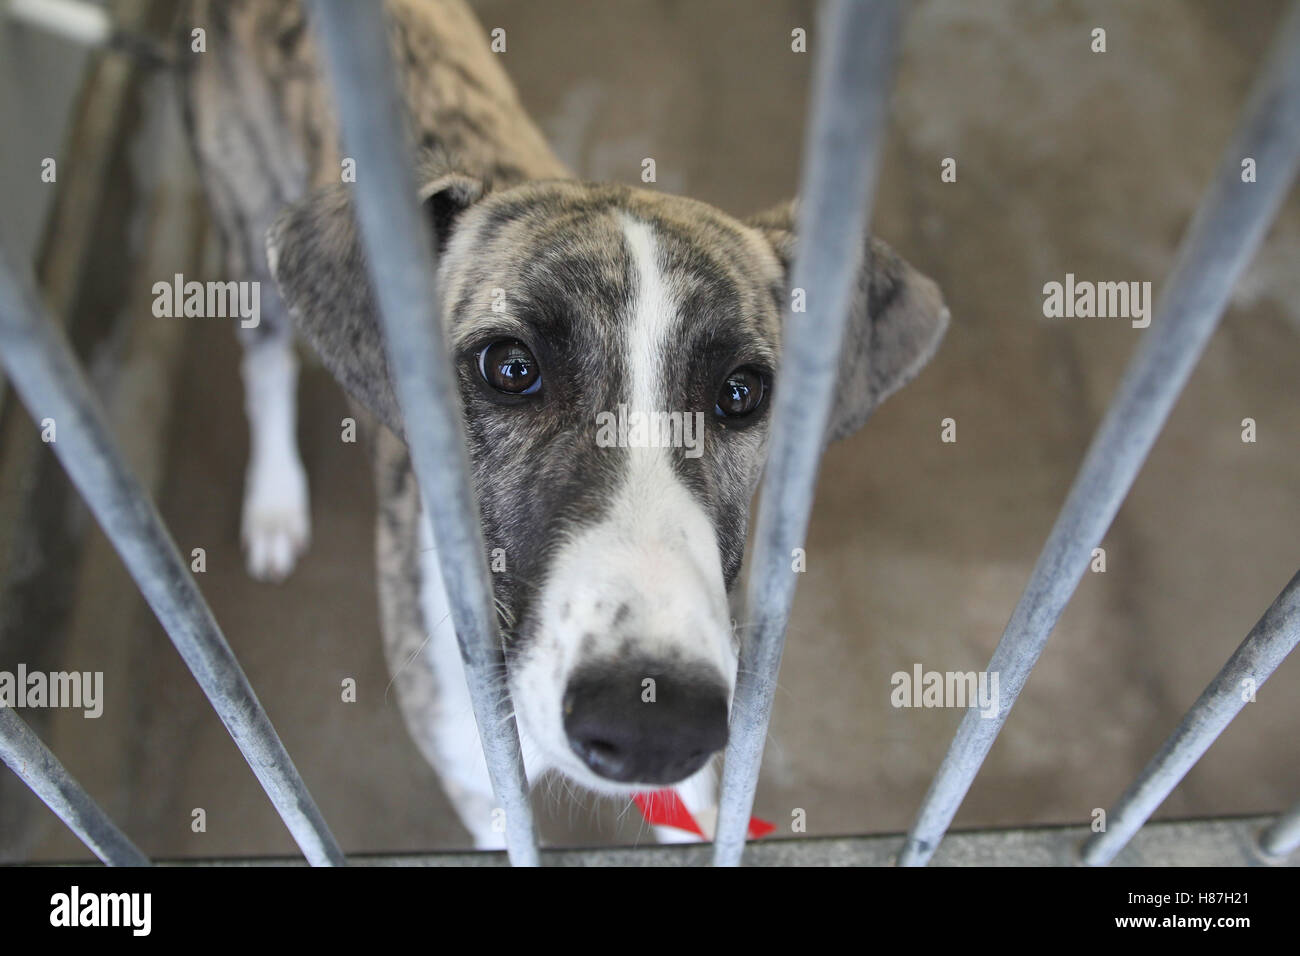 dog in rescue center Stock Photo